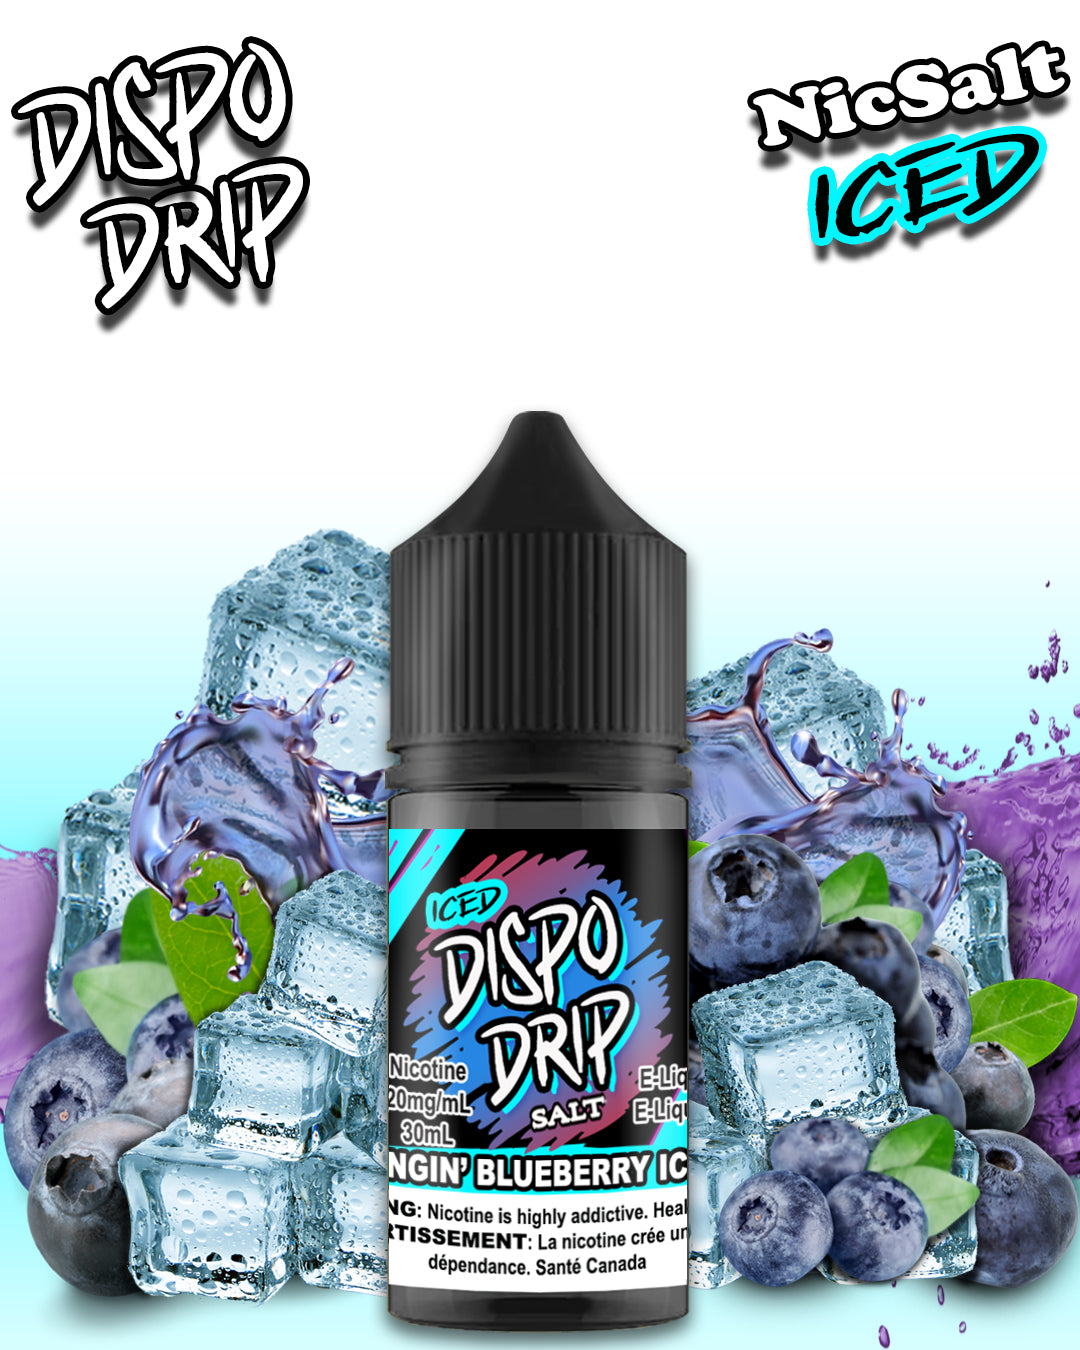 DISPO DRIP ICED - BANGIN' BLUEBERRY ICED SALT